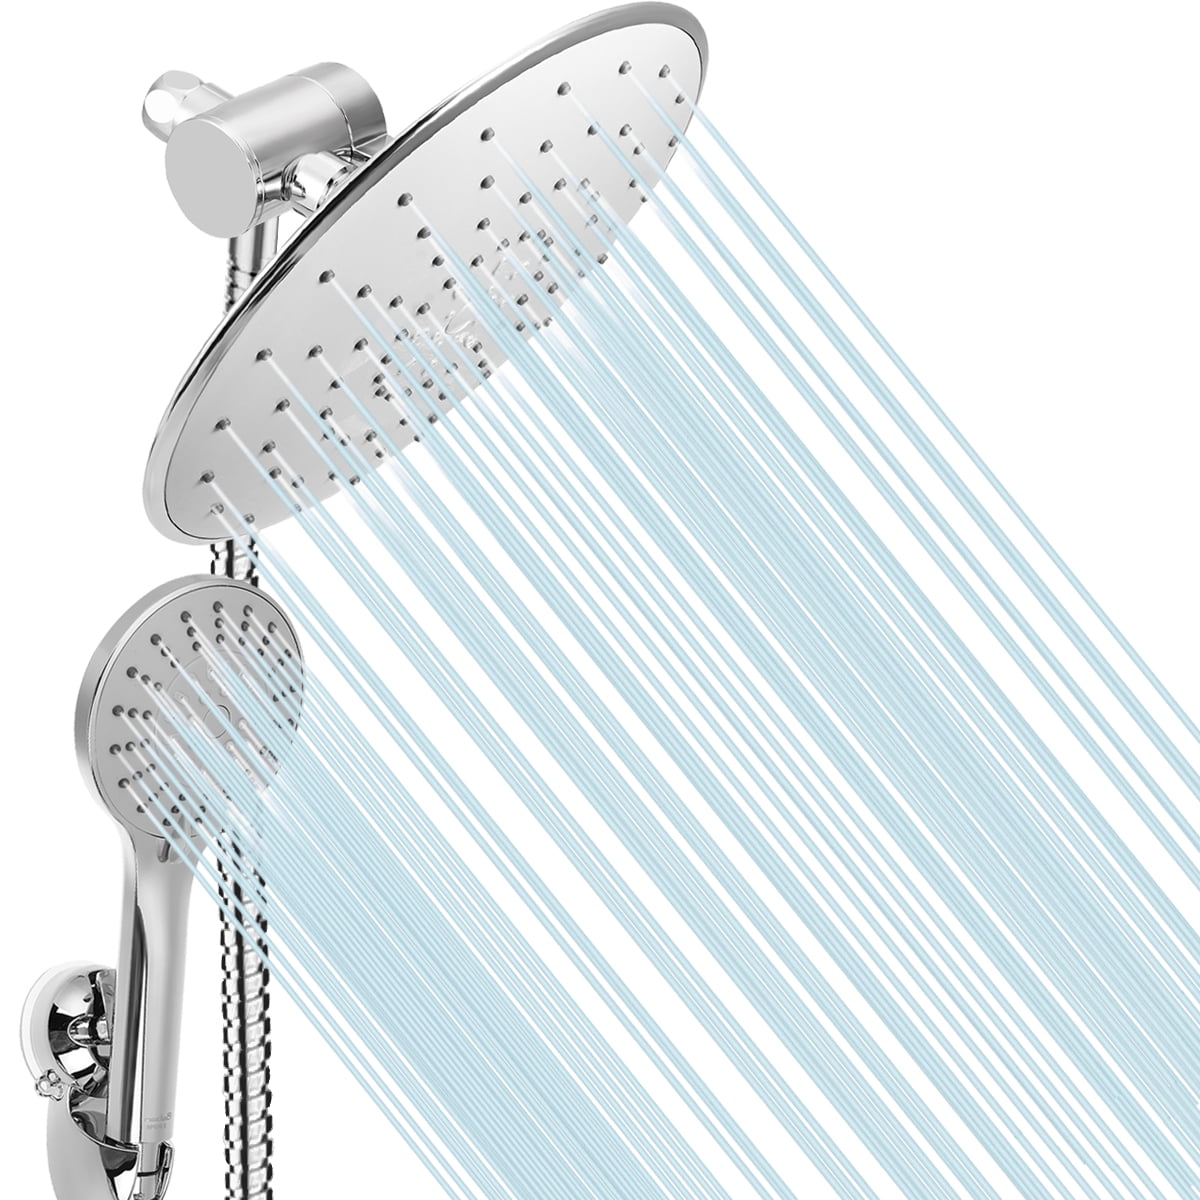 Rainfall Shower HeadHigh PressureHigh Flow 8 Inch ShowerheadAnti-Leak 